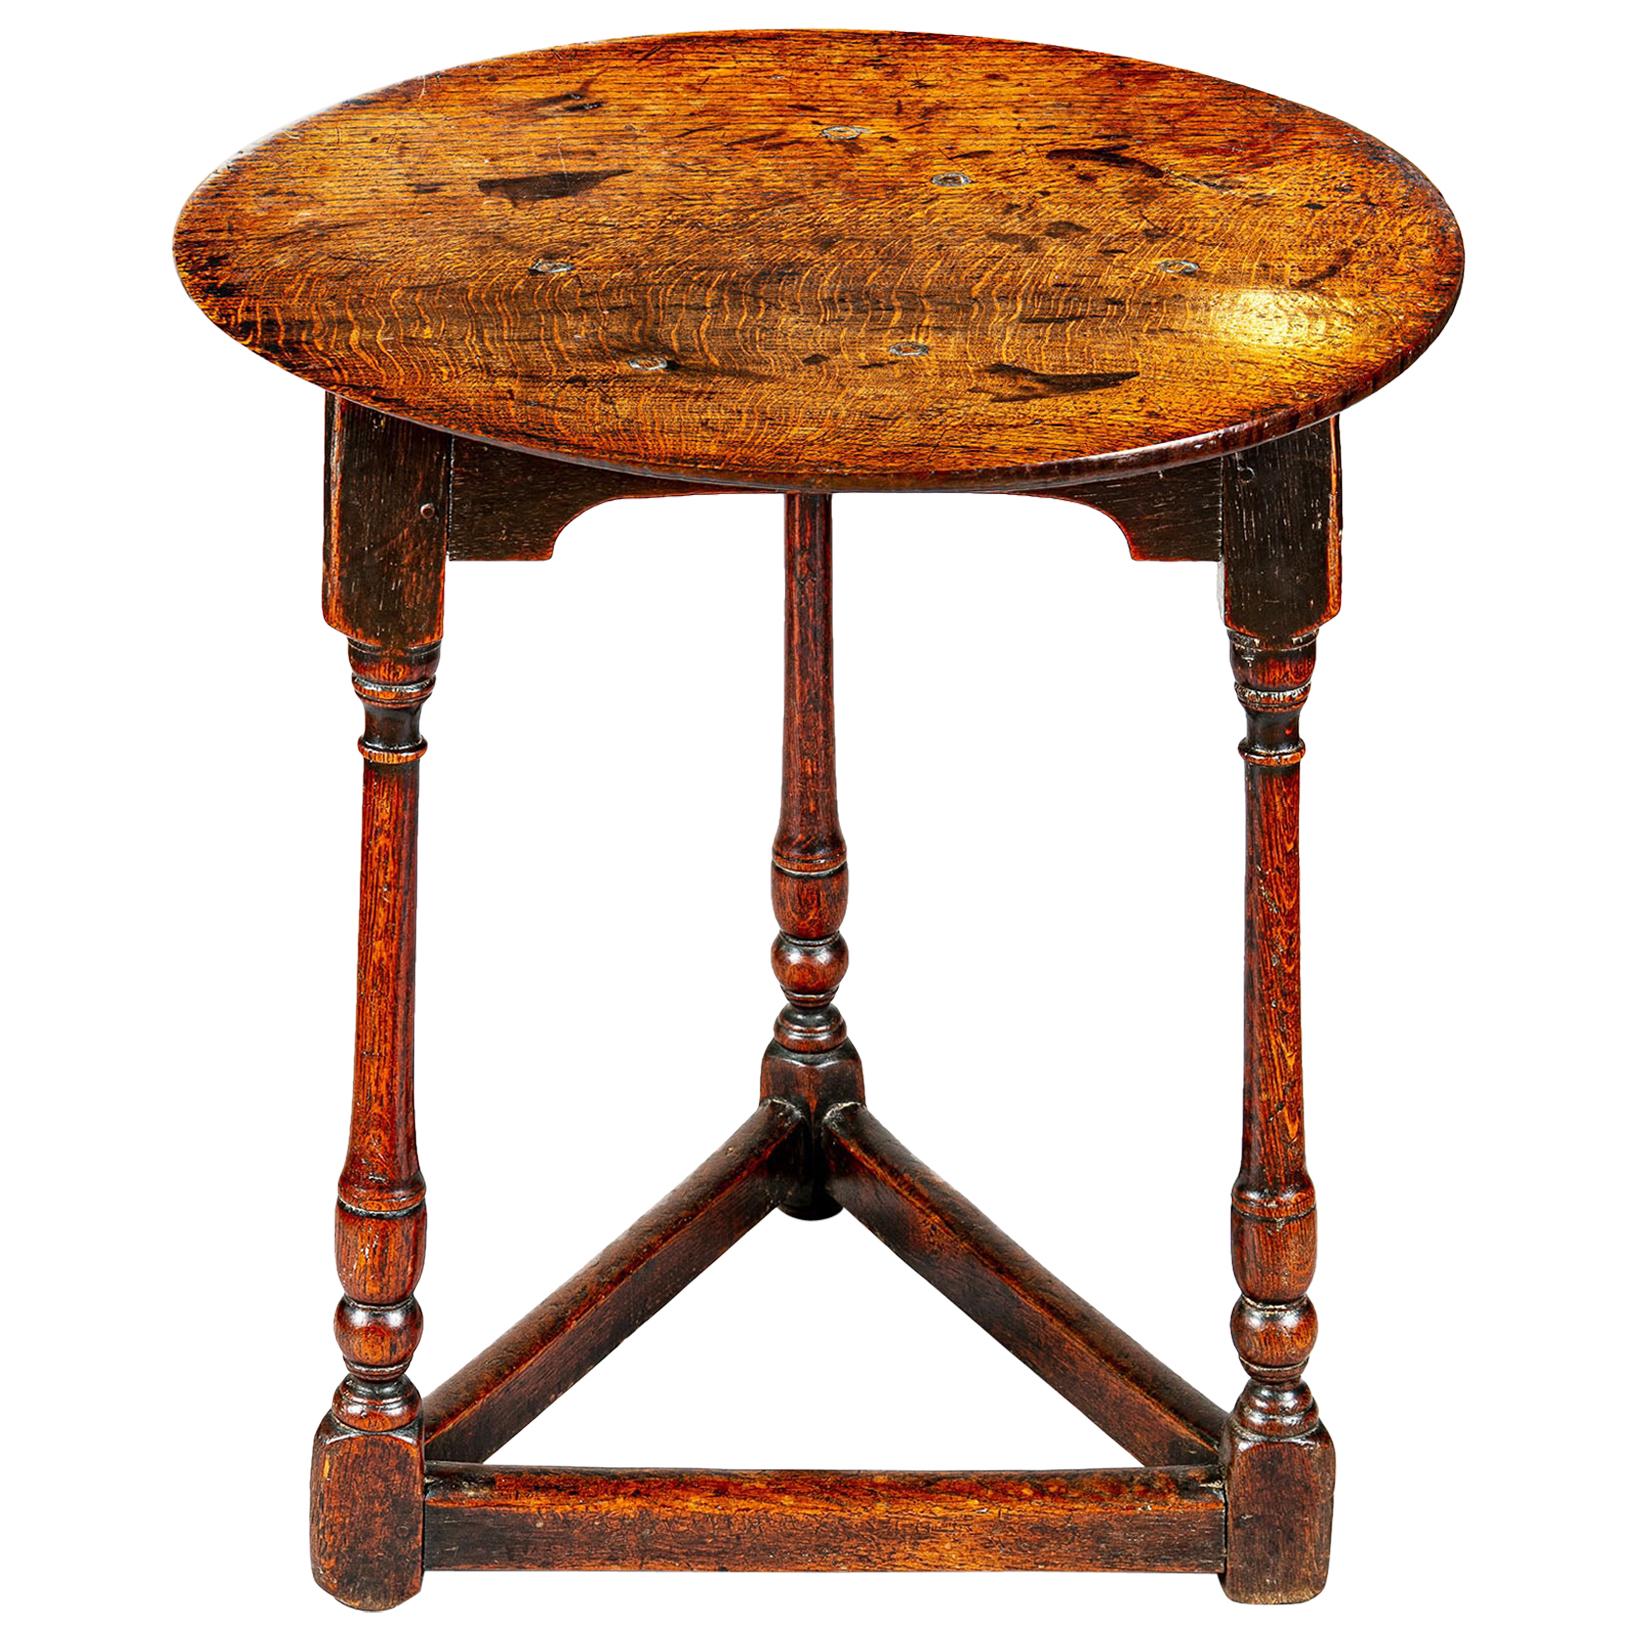 English Carolinian Oak Cricket Table, 17th Century